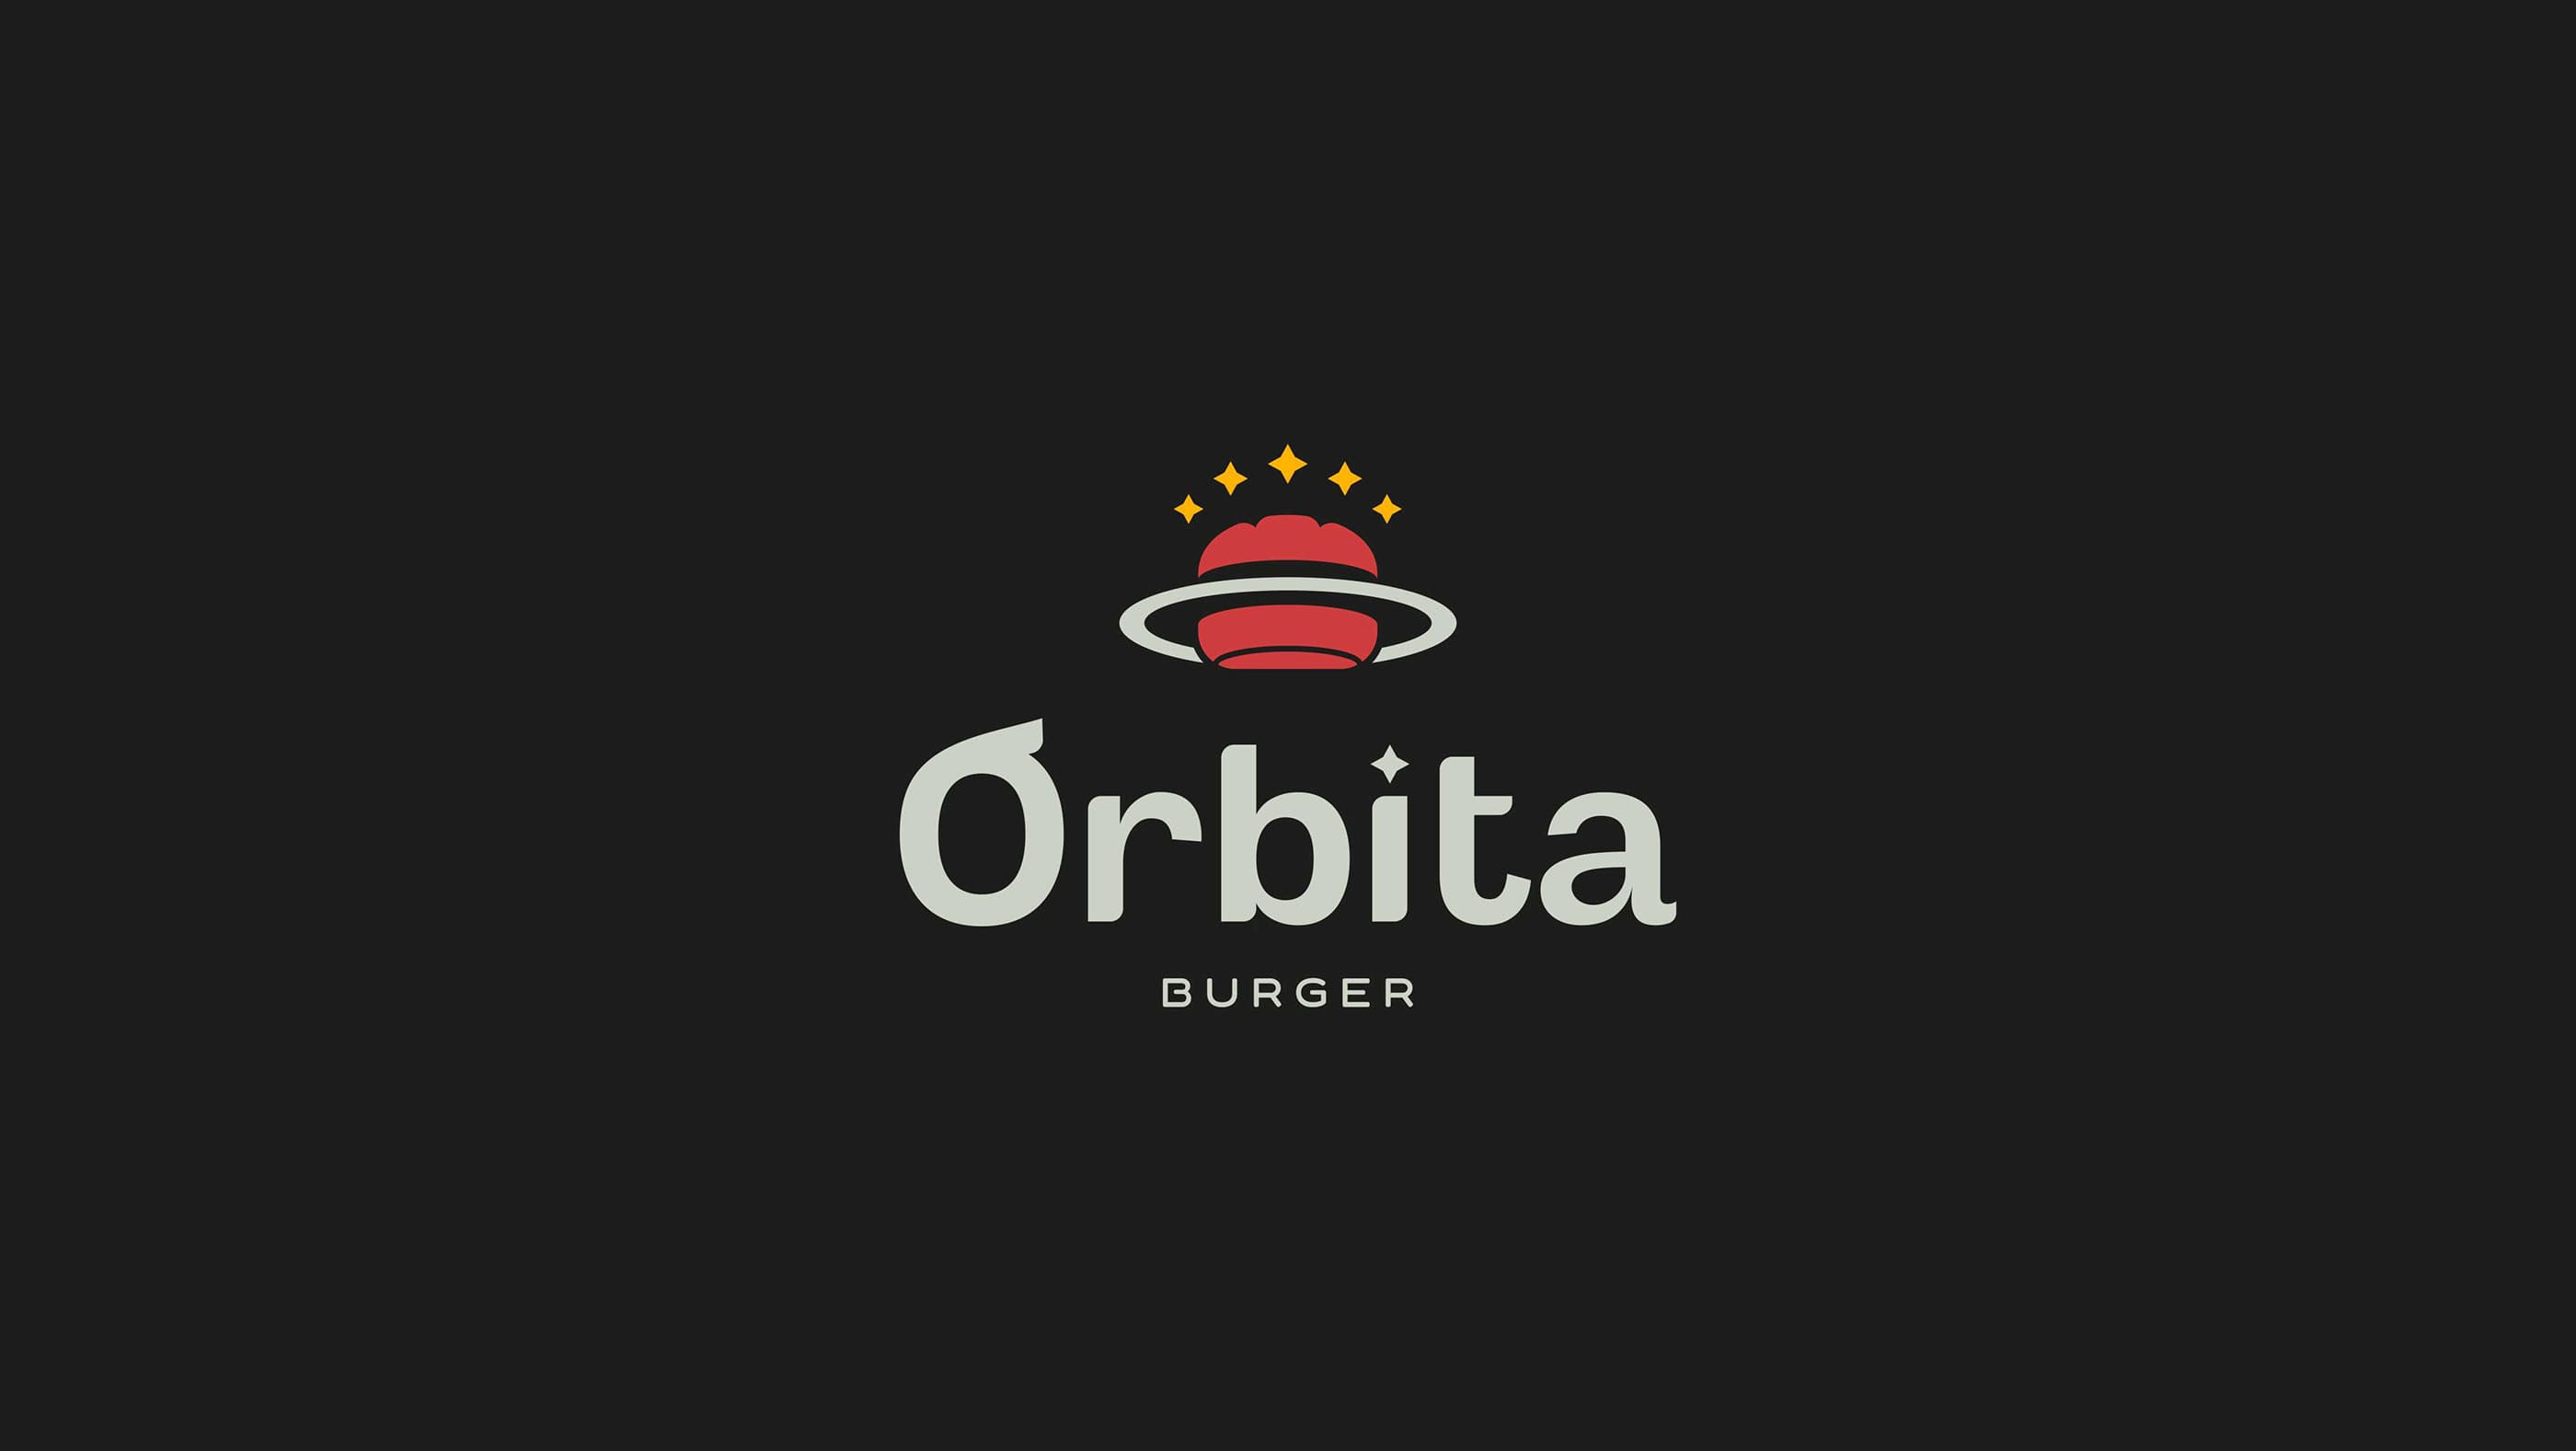 Orbita Burger – Redefining Fast Food with Innovative Design